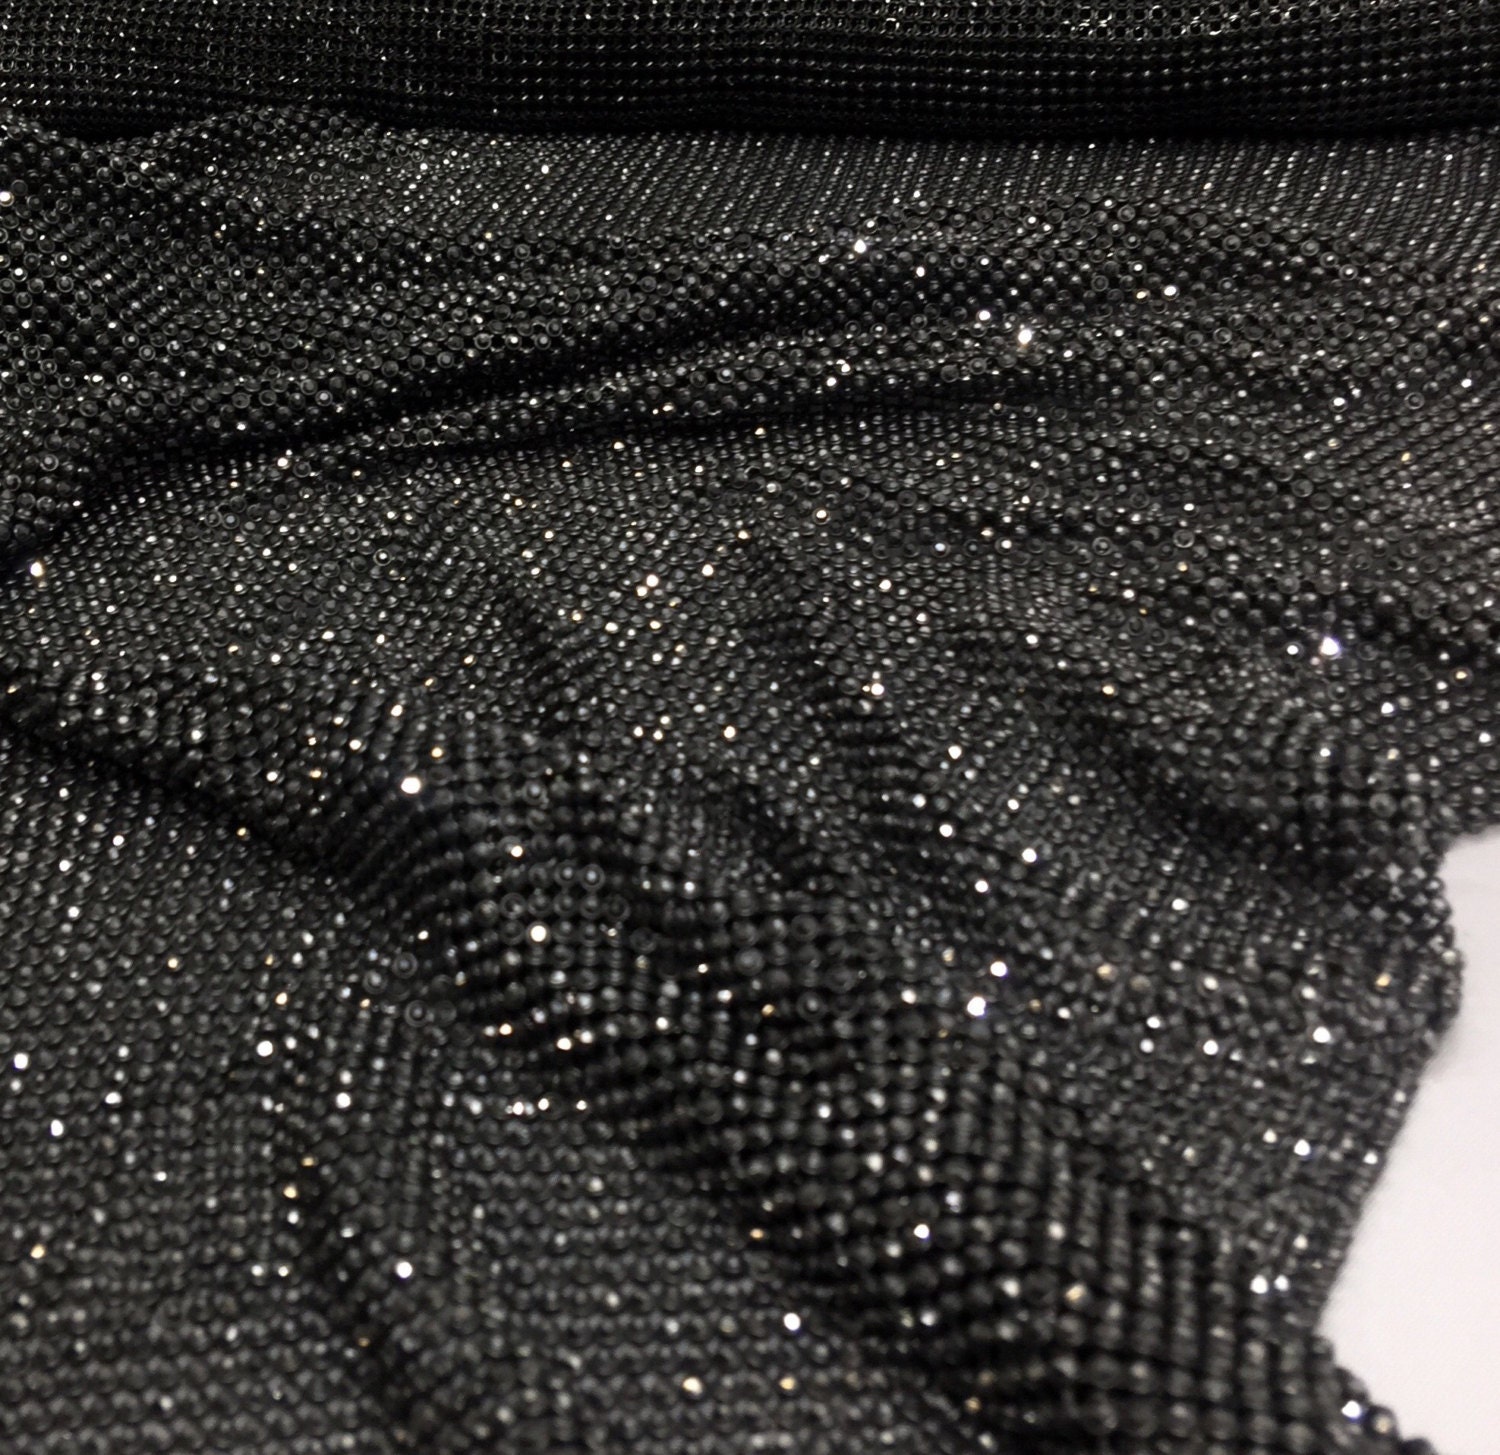 Black Rhinestone Sheet, Black Crystal Fabric, Black Rhinestone